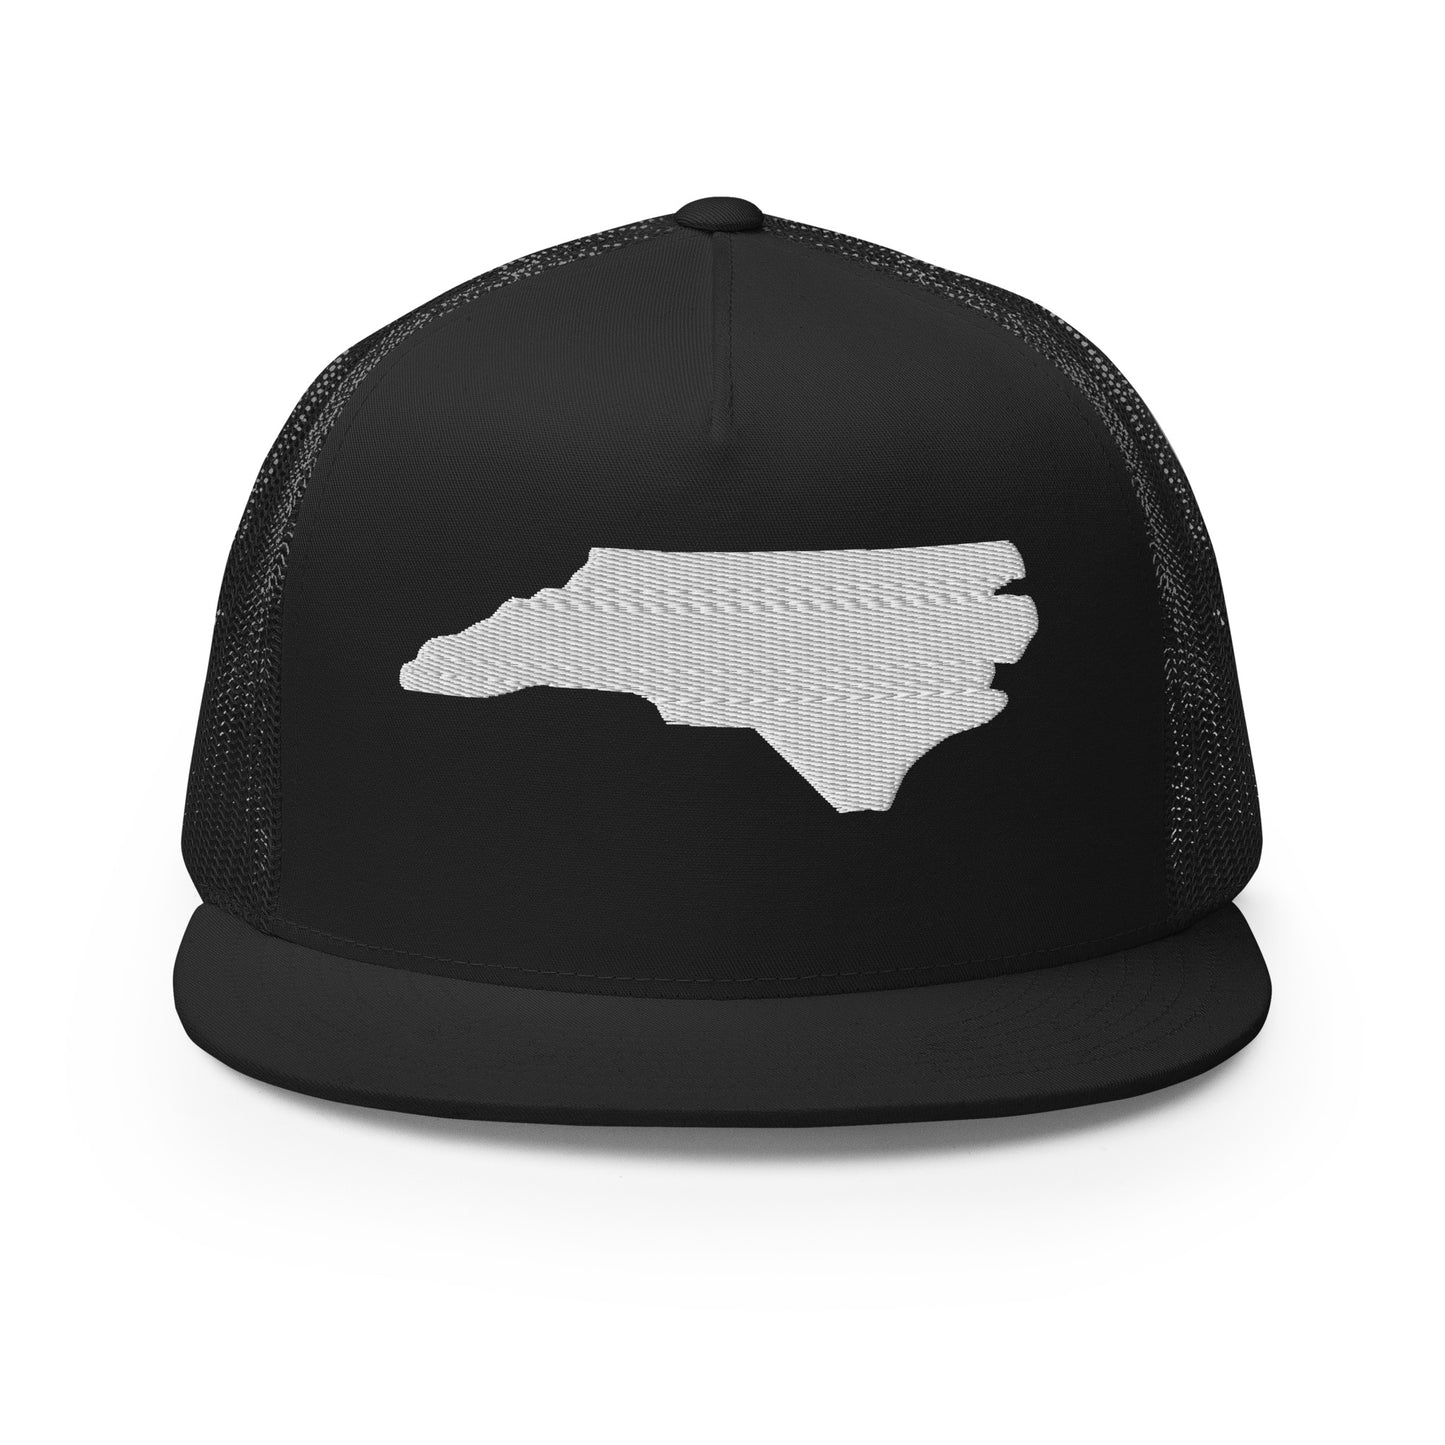 North Carolina State Silhouette High 5 Panel A-Frame Snapback Trucker Hat